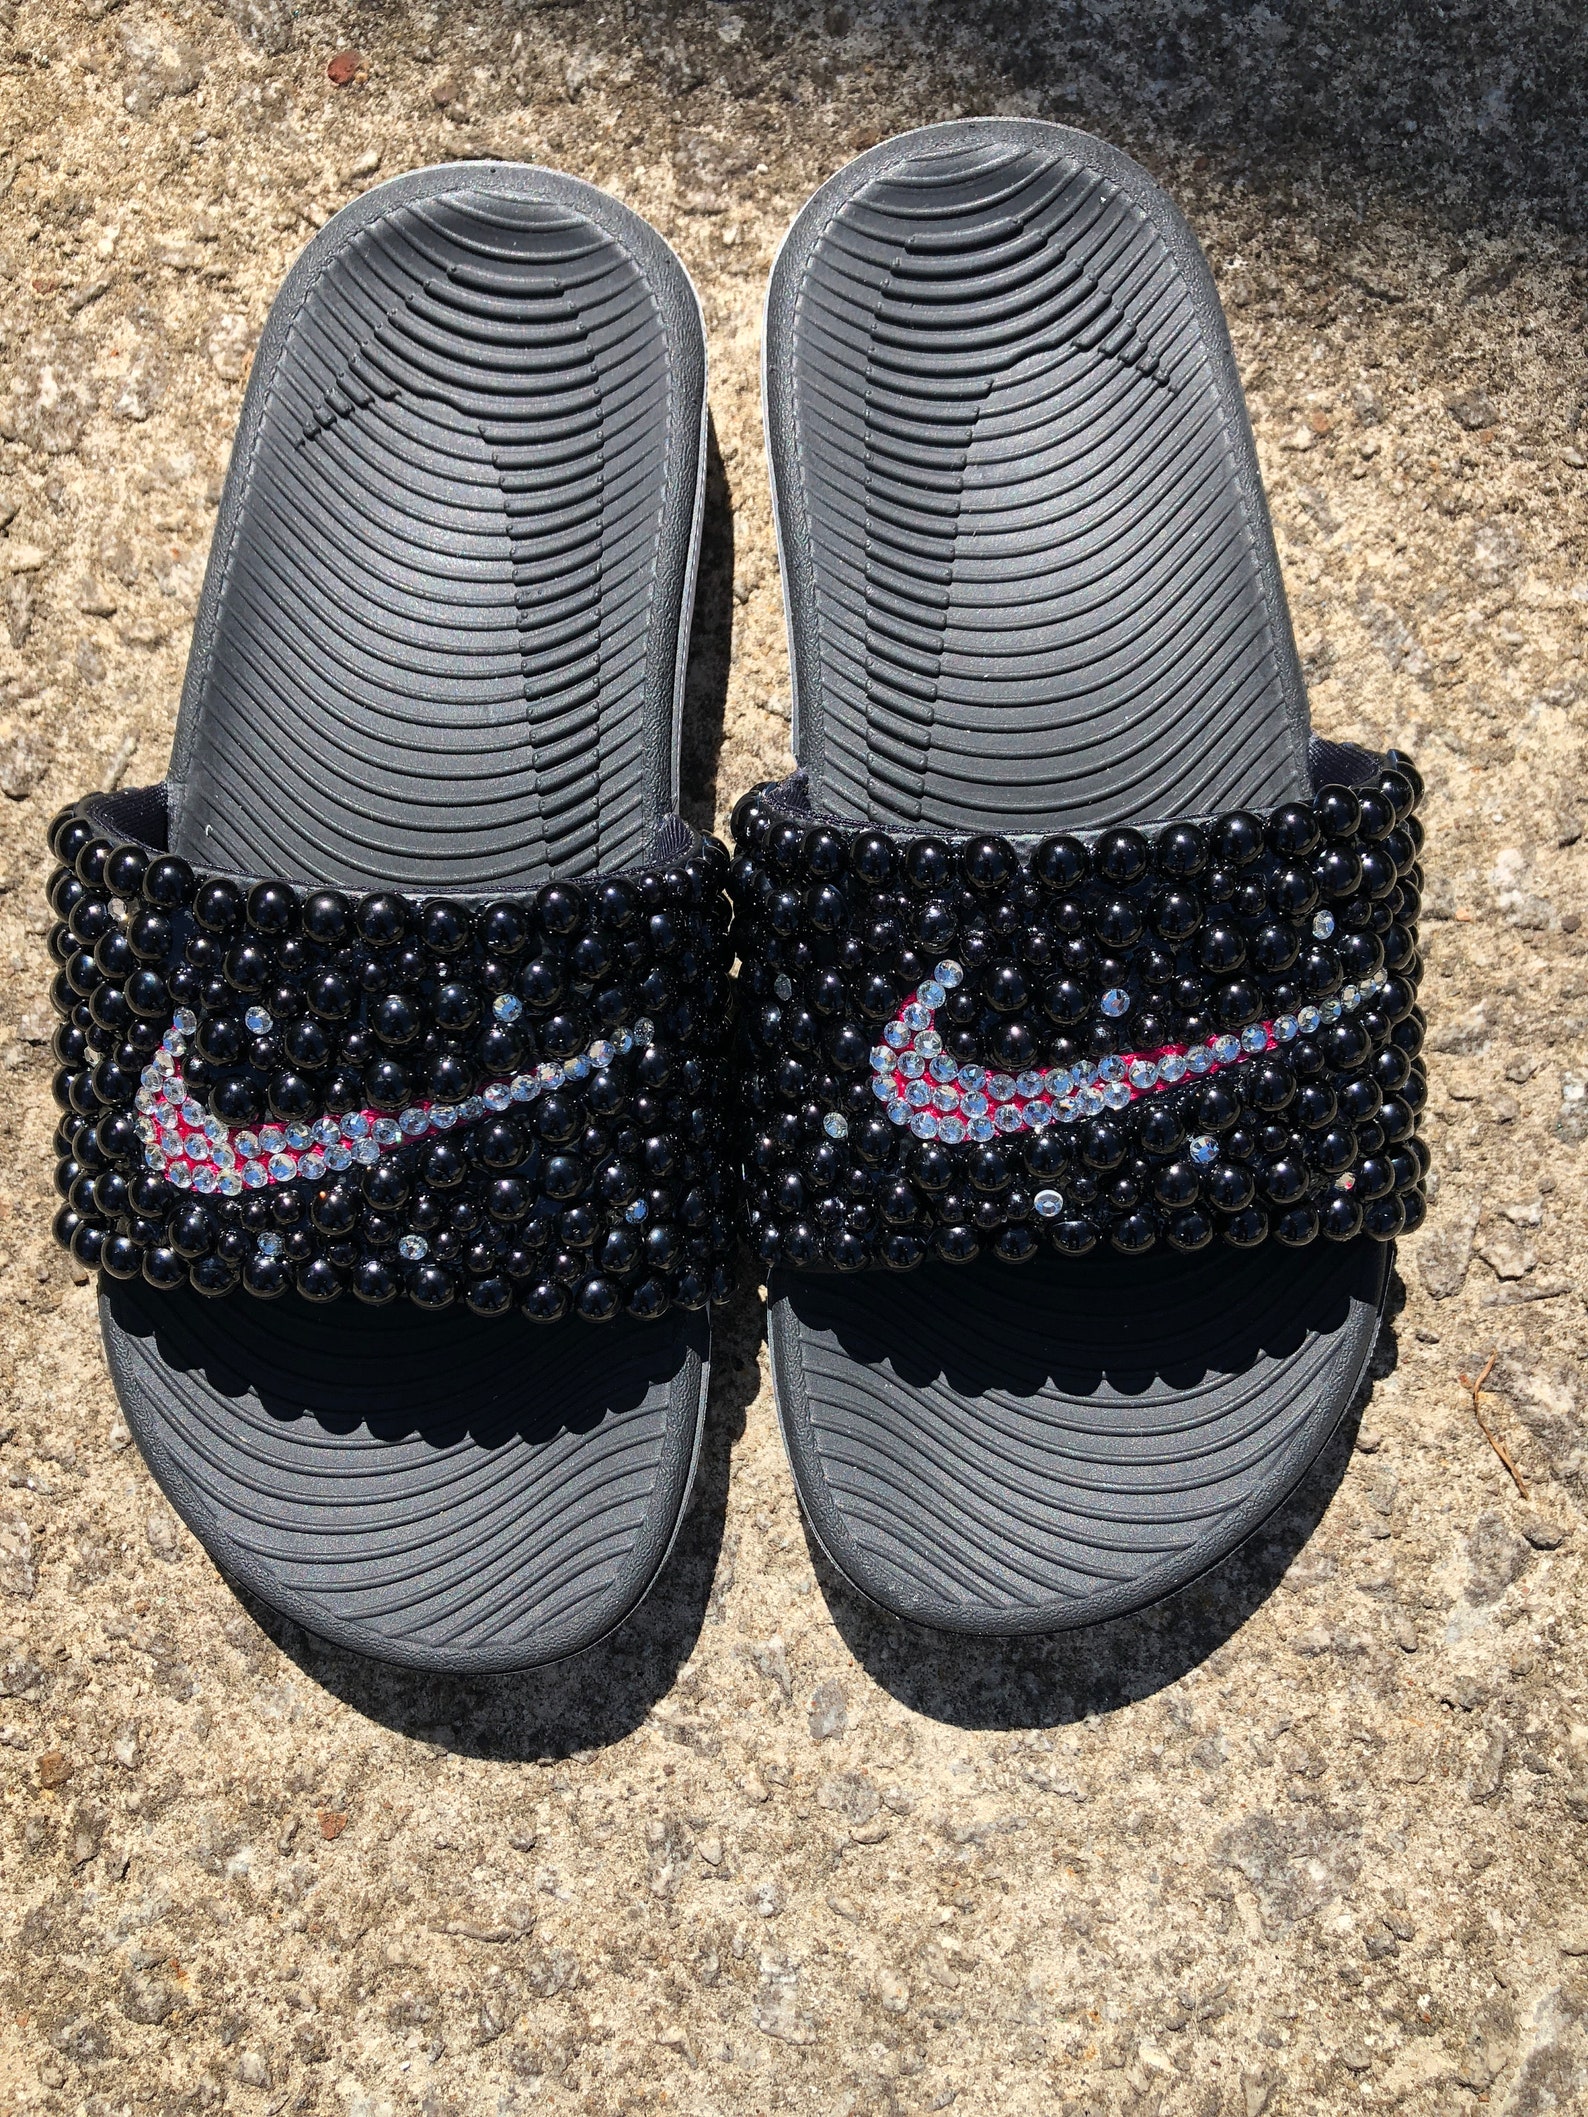 Black and Hot Pink Bling Nike Slides | Etsy